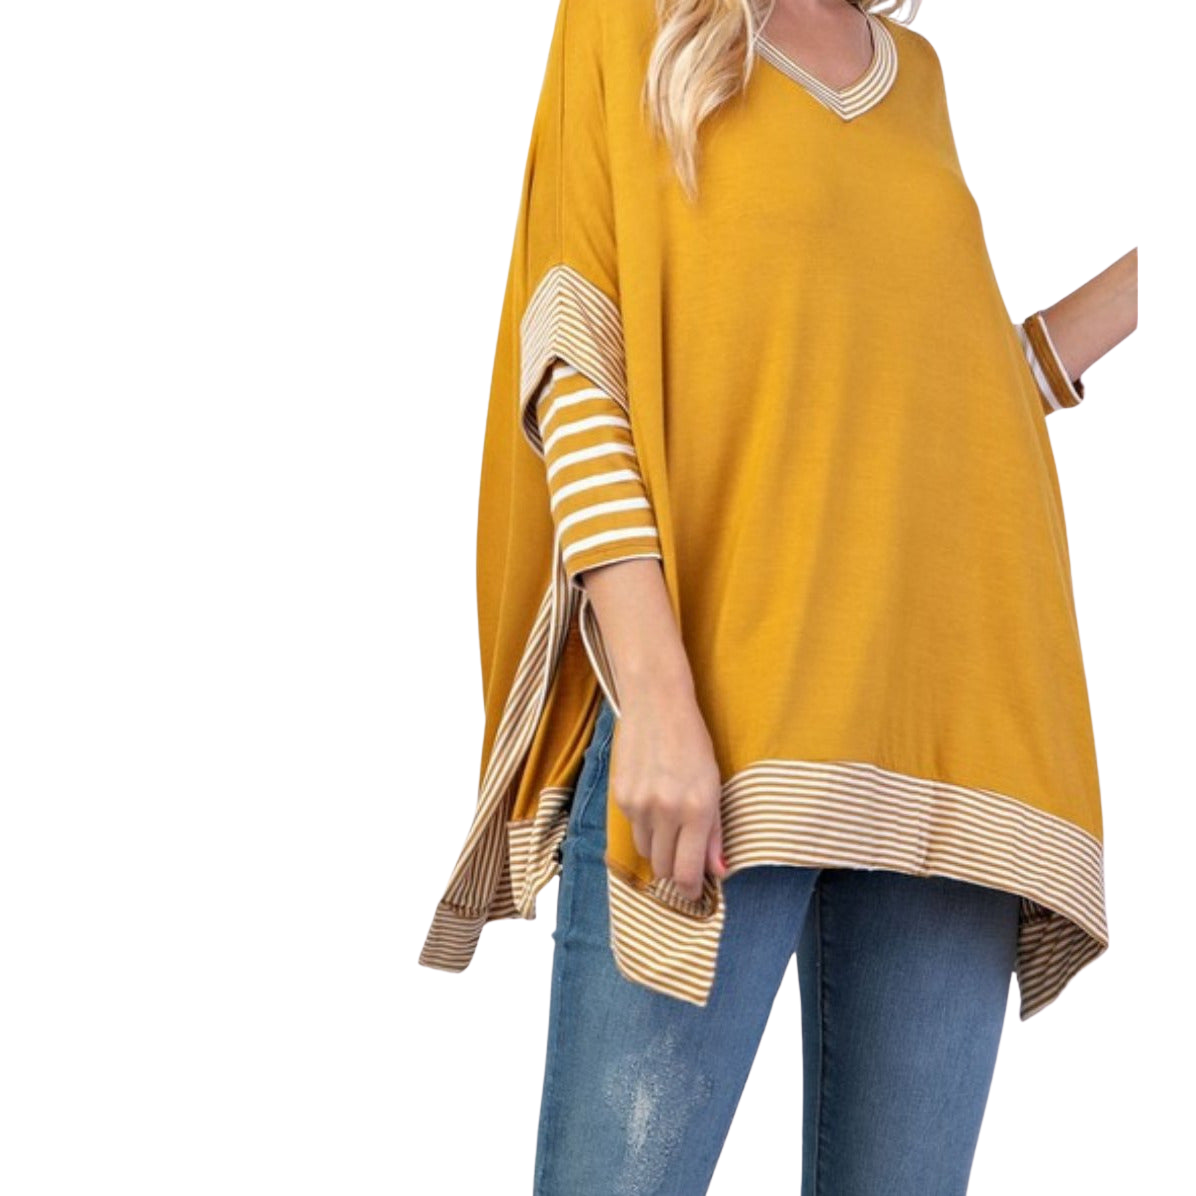 Carmin Poncho Knit Top (Mustard) - Ariya's Apparel and Accessories